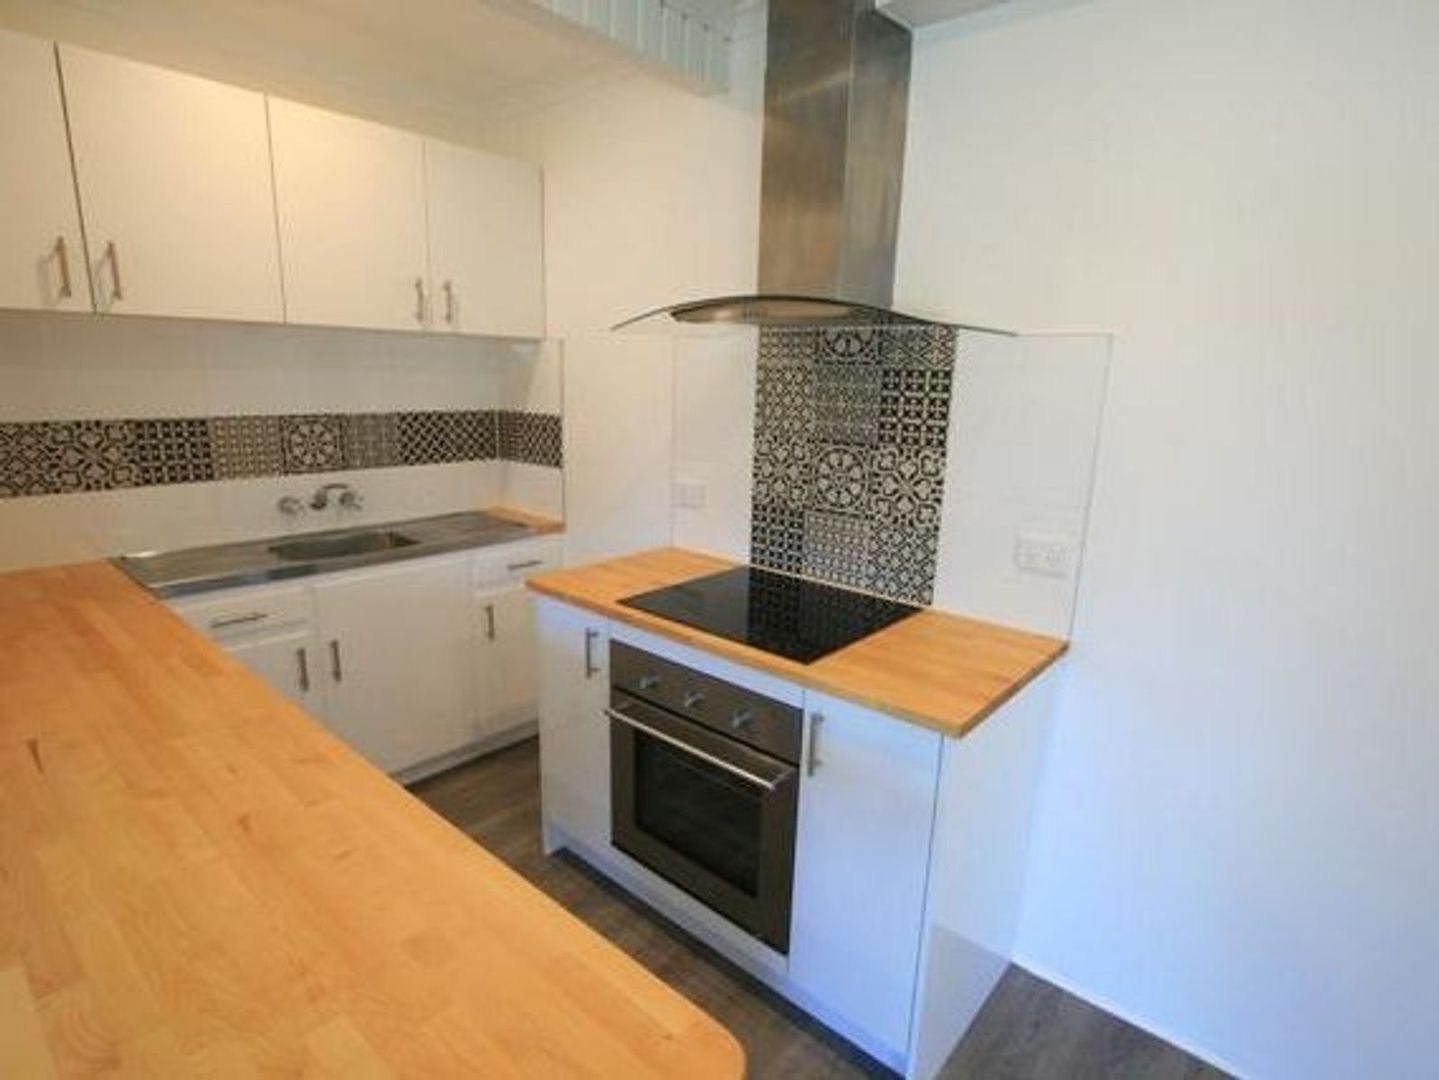 2/15 Adori Street, Chevron Island QLD 4217 - Apartment For Rent | Domain